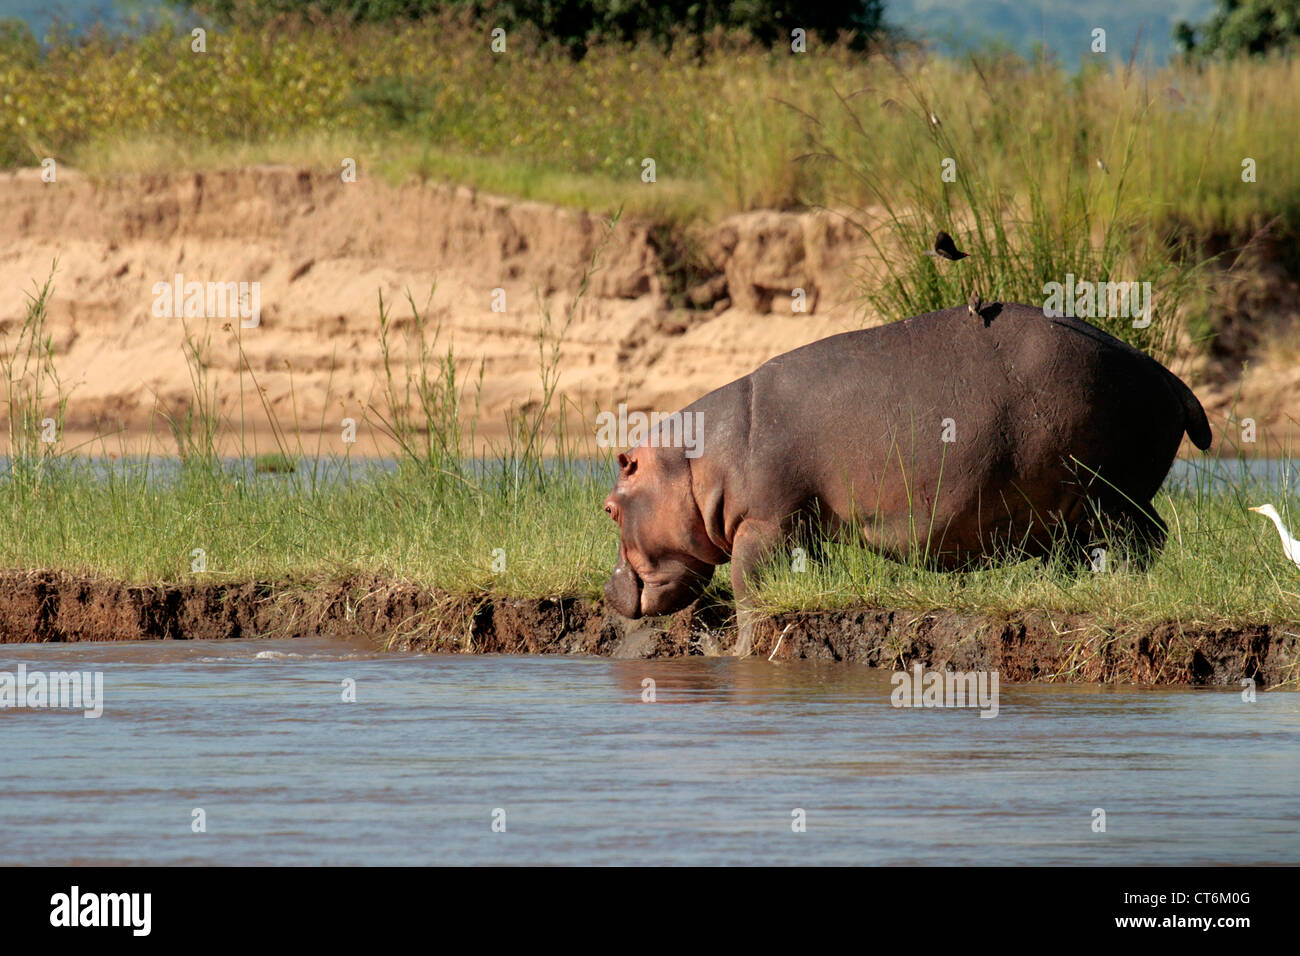 Hippopotamus walking on river bank Stock Photo